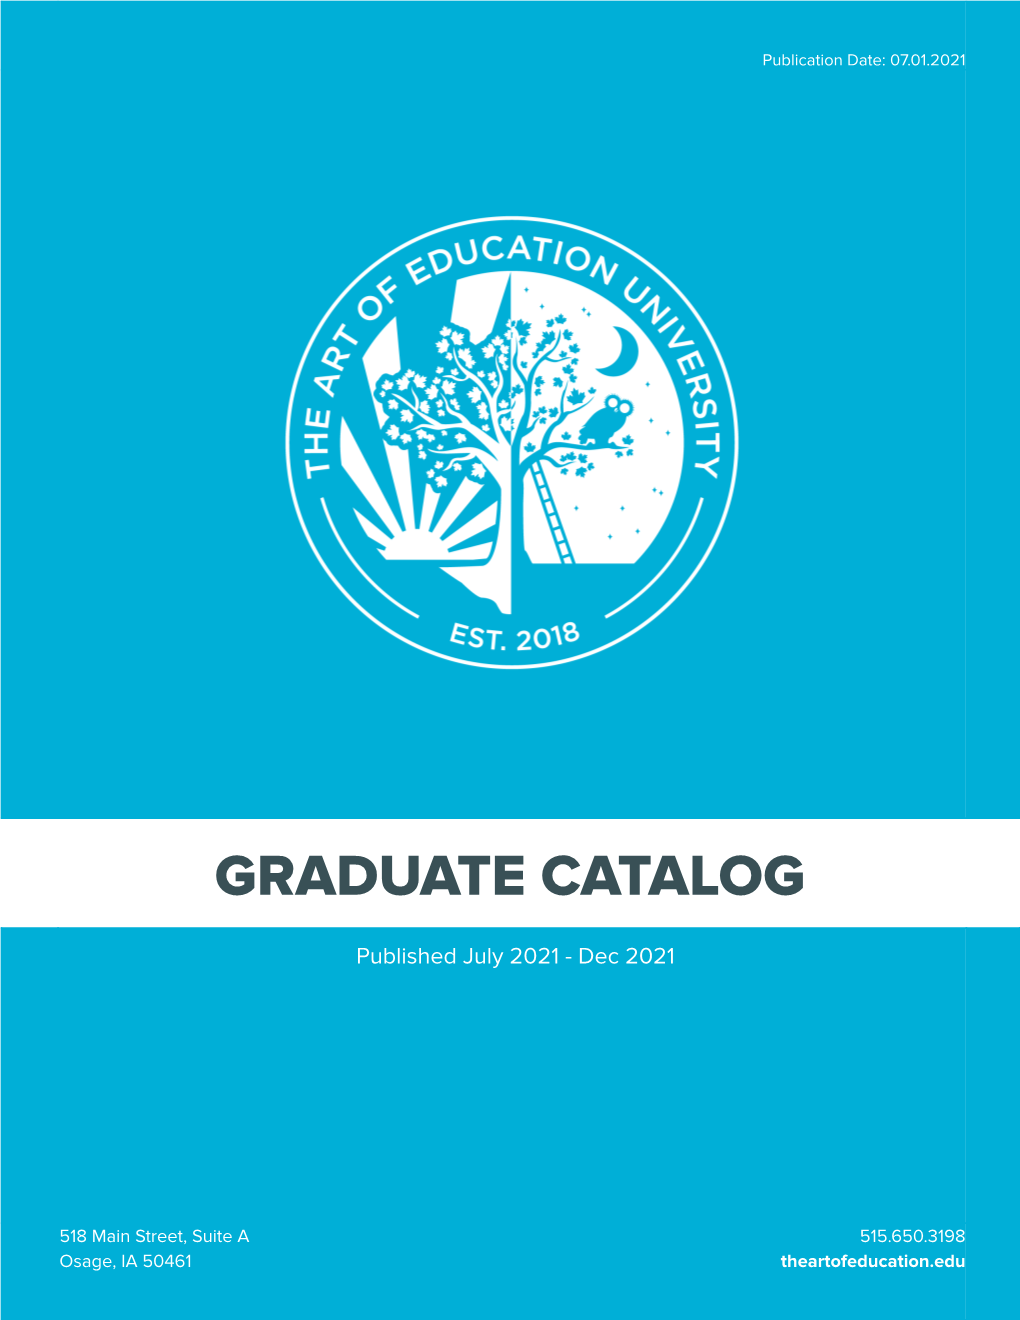 Graduate Catalog Addendum: July 2021